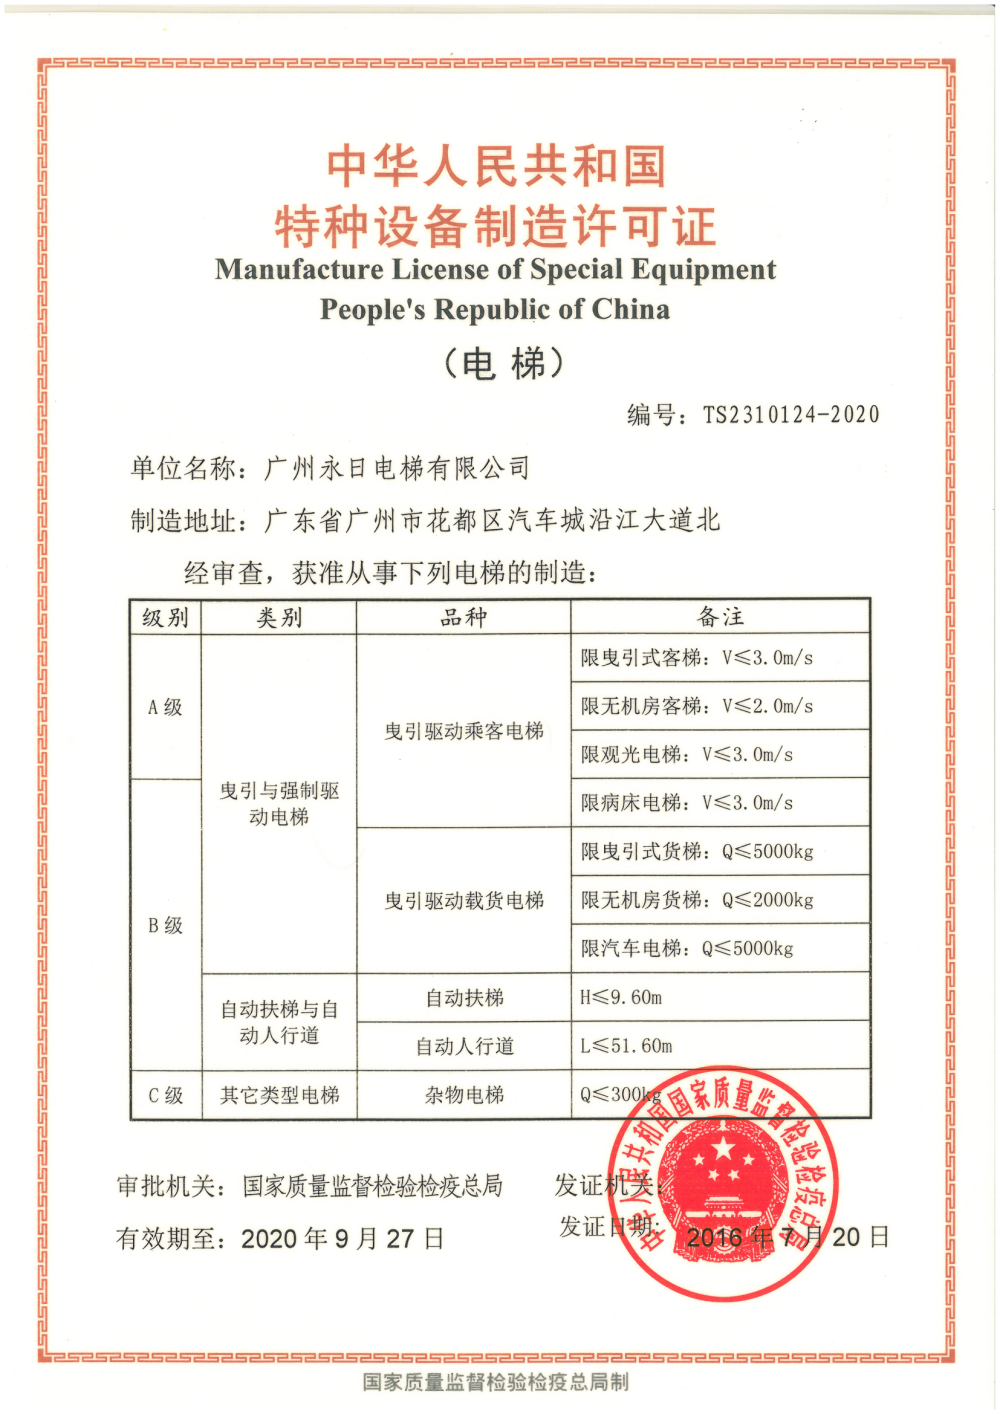 Special equipment manufacturing license (Guangzhou)